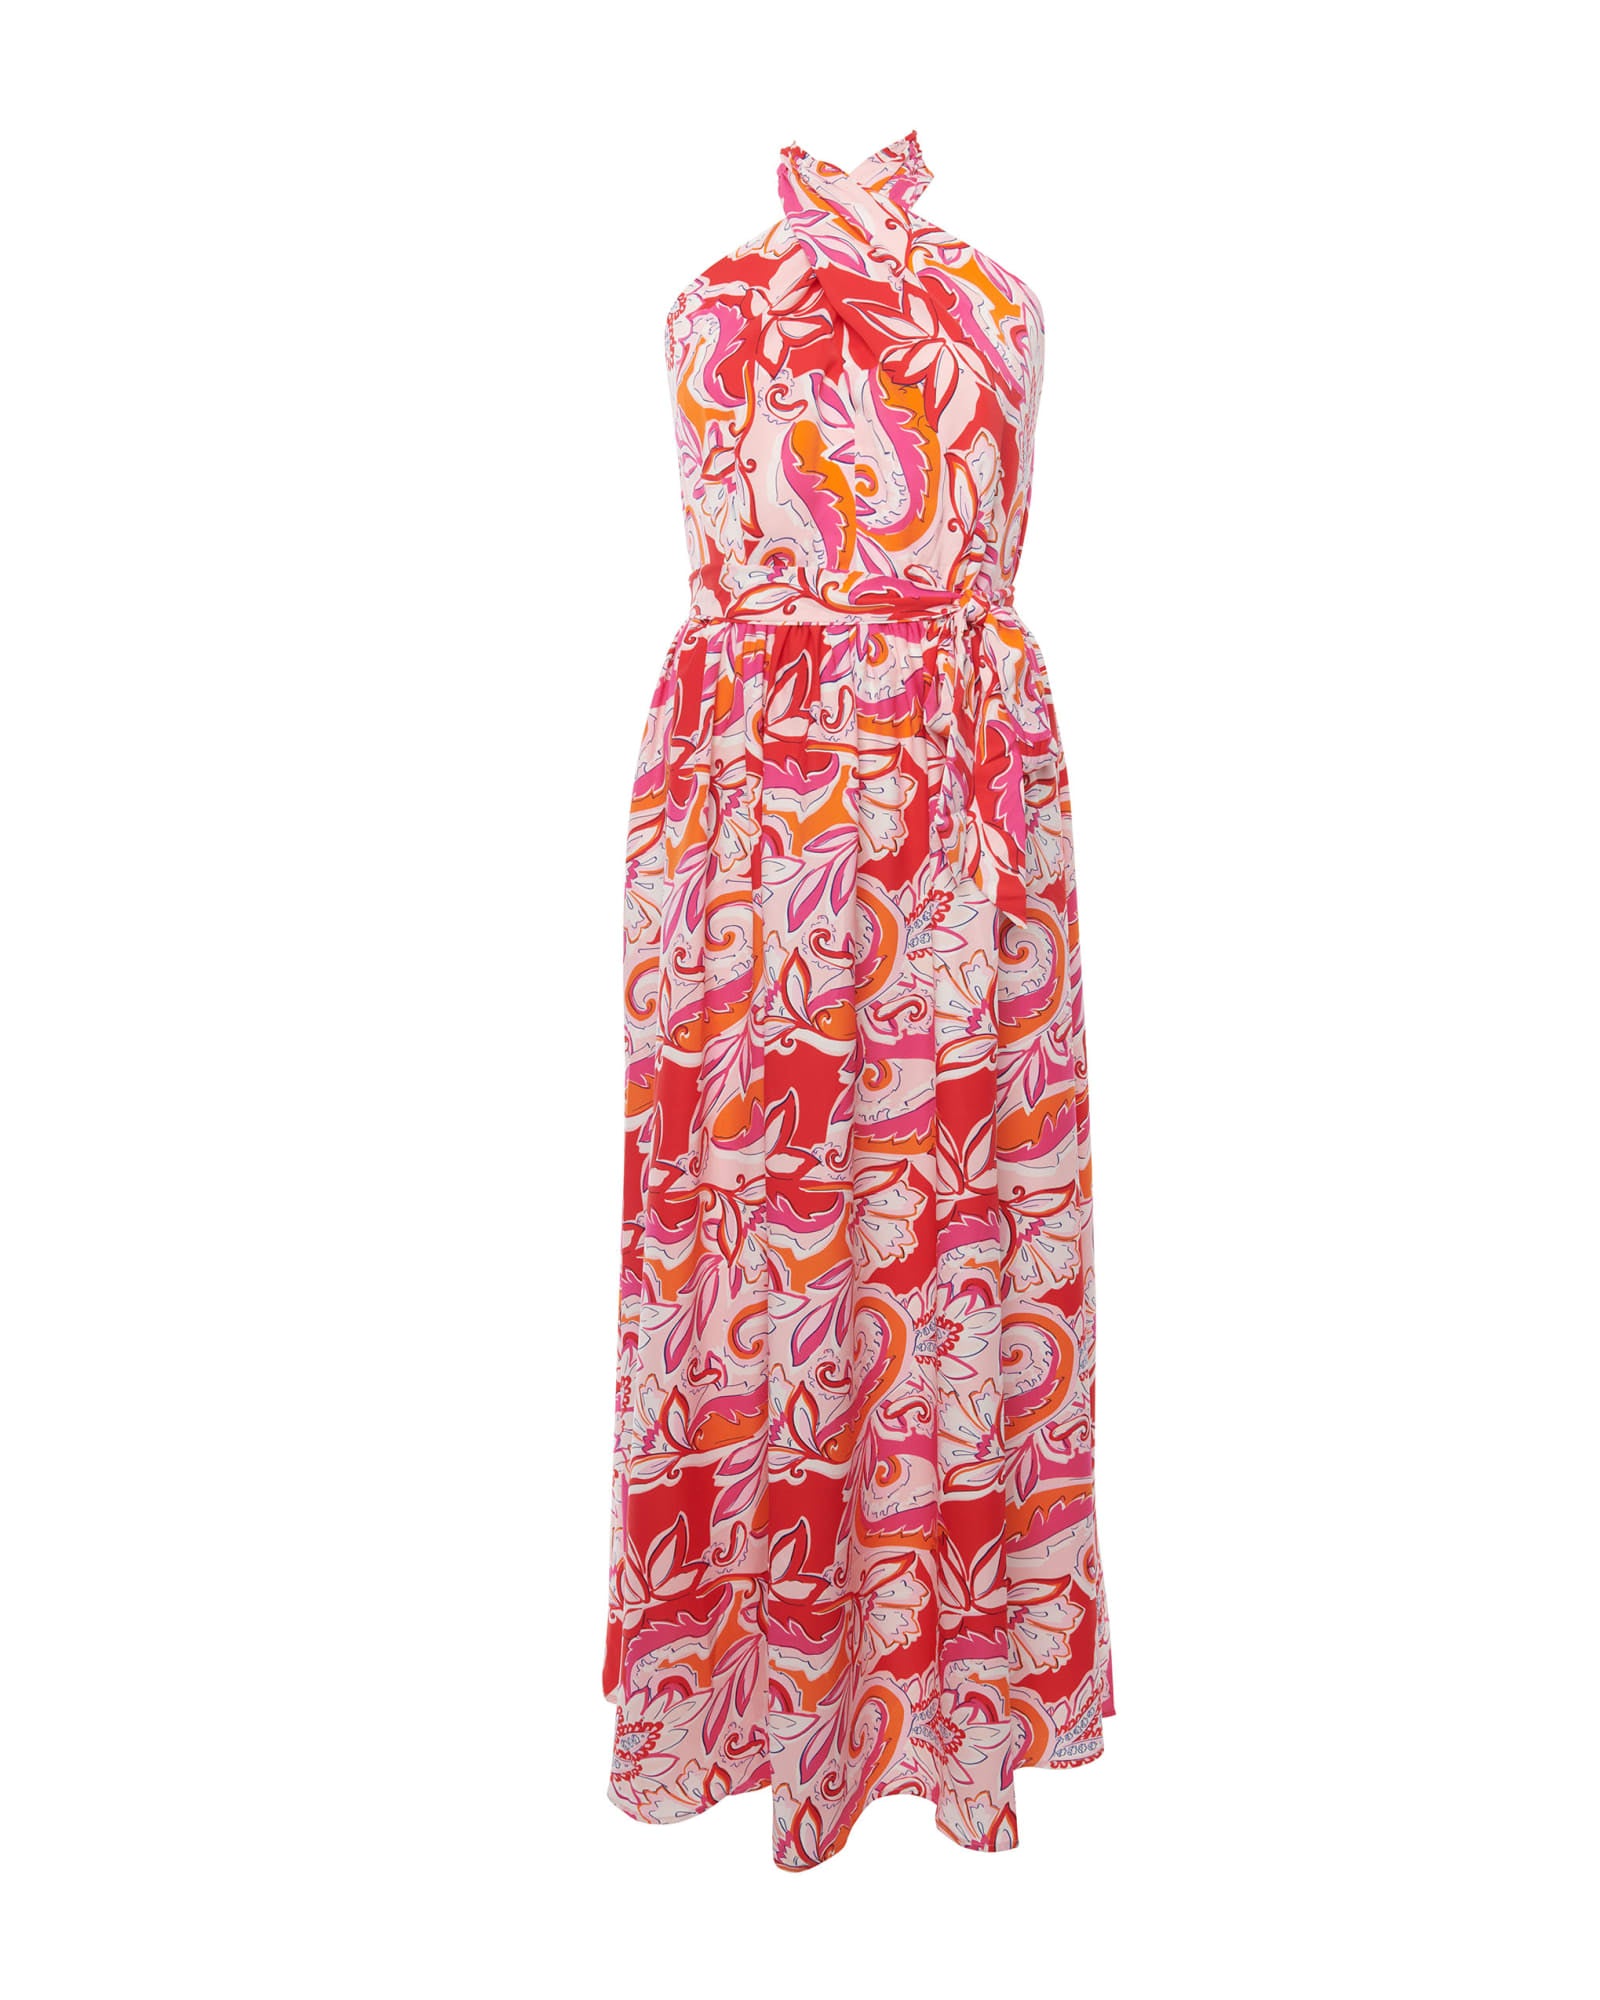 Smak Parlour Pink & Red Floral Budding Romance Maxi Dress | Pink, Red, Floral